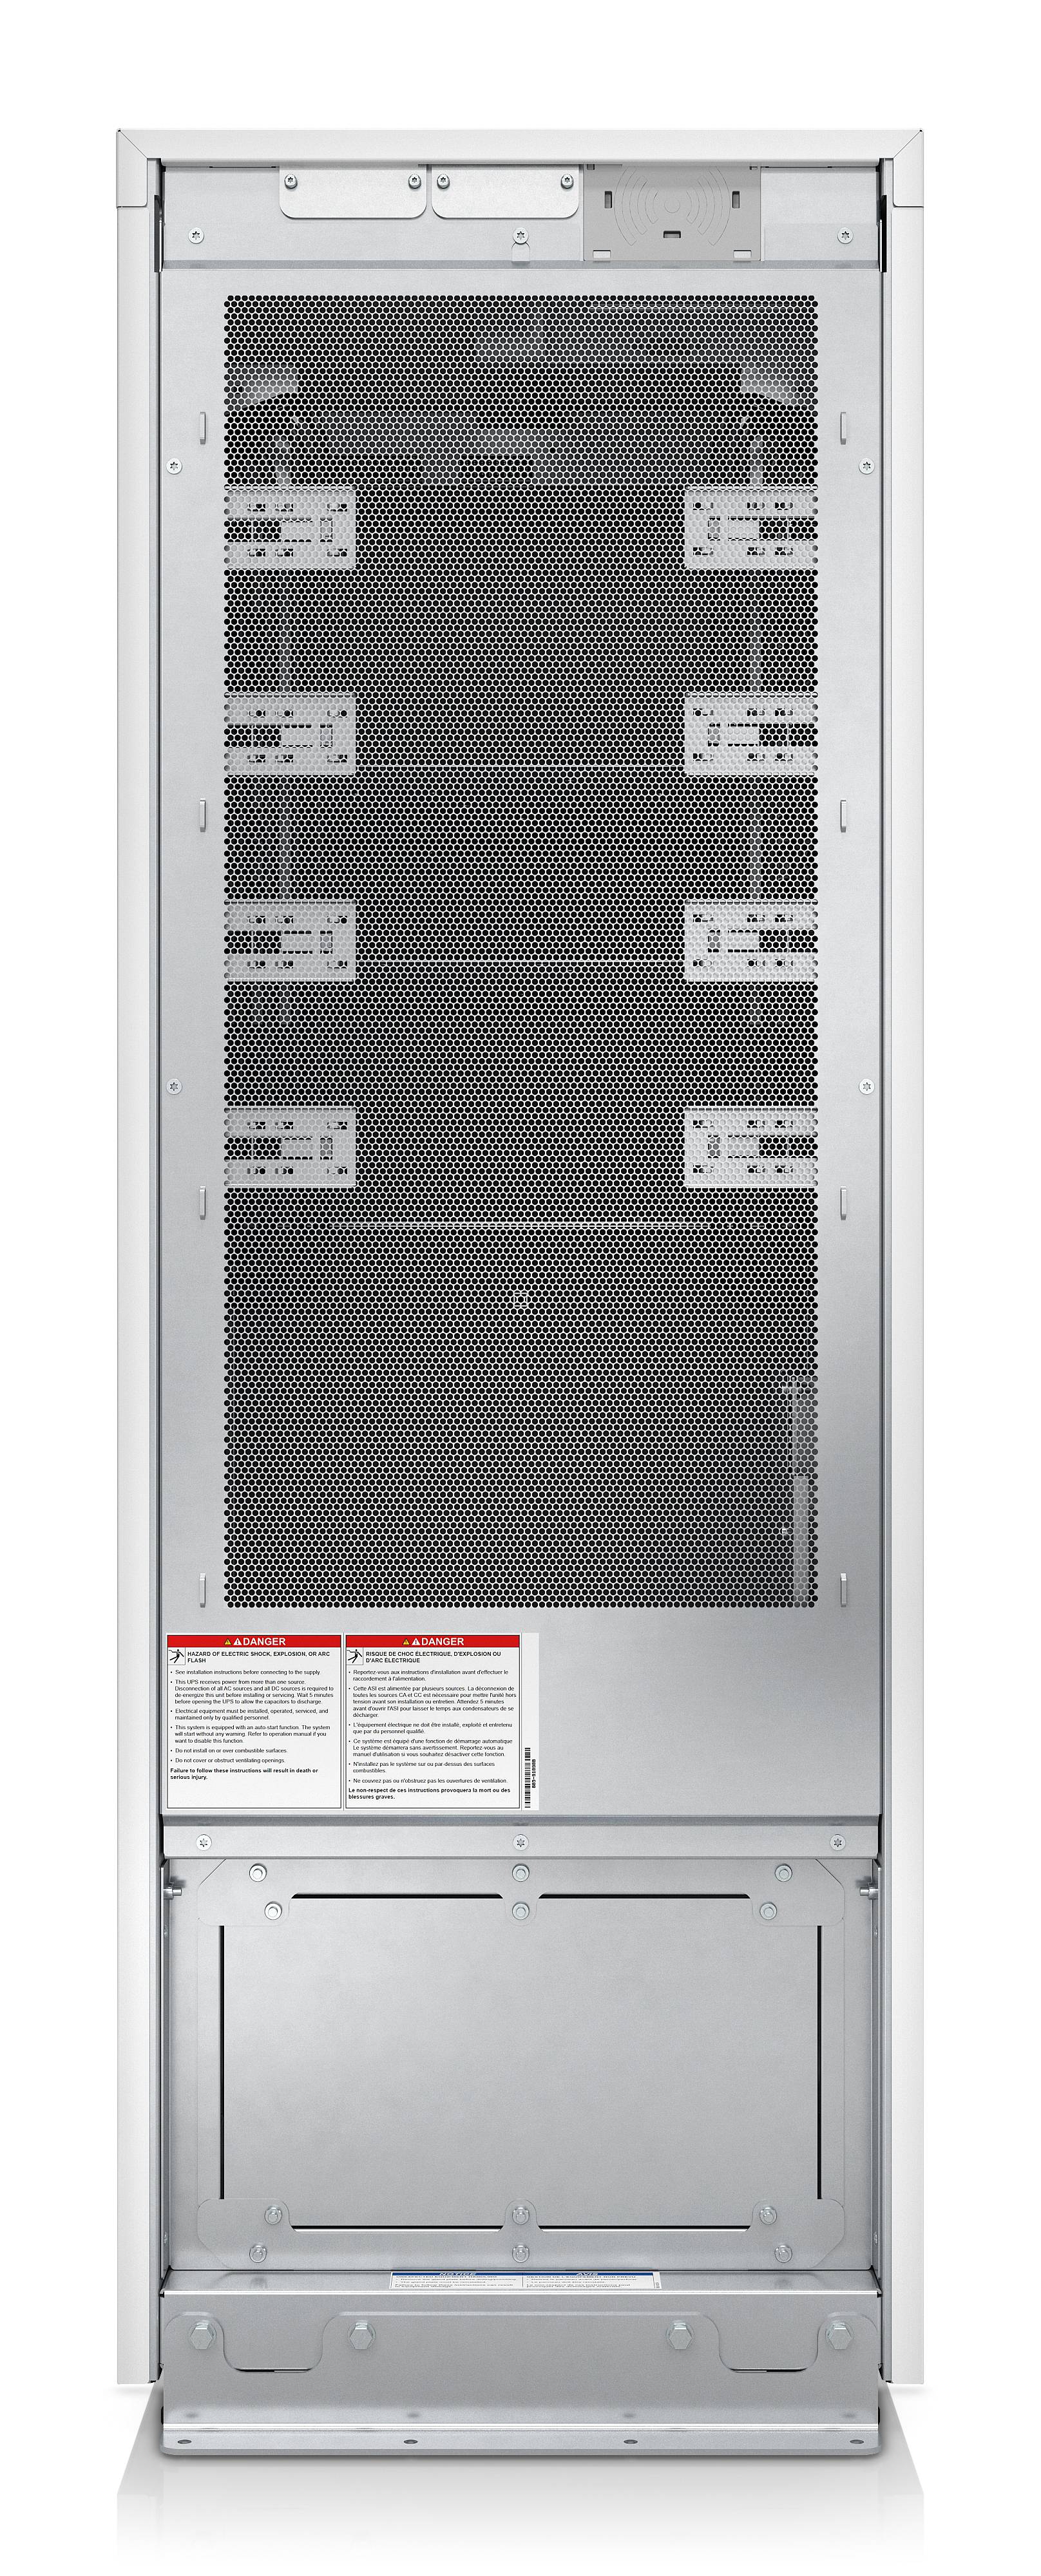 Rca Informatique - image du produit : GALAXY VS UPS 60KW 400V FOR EXTERNAL BATTERIES START-UP 5X8